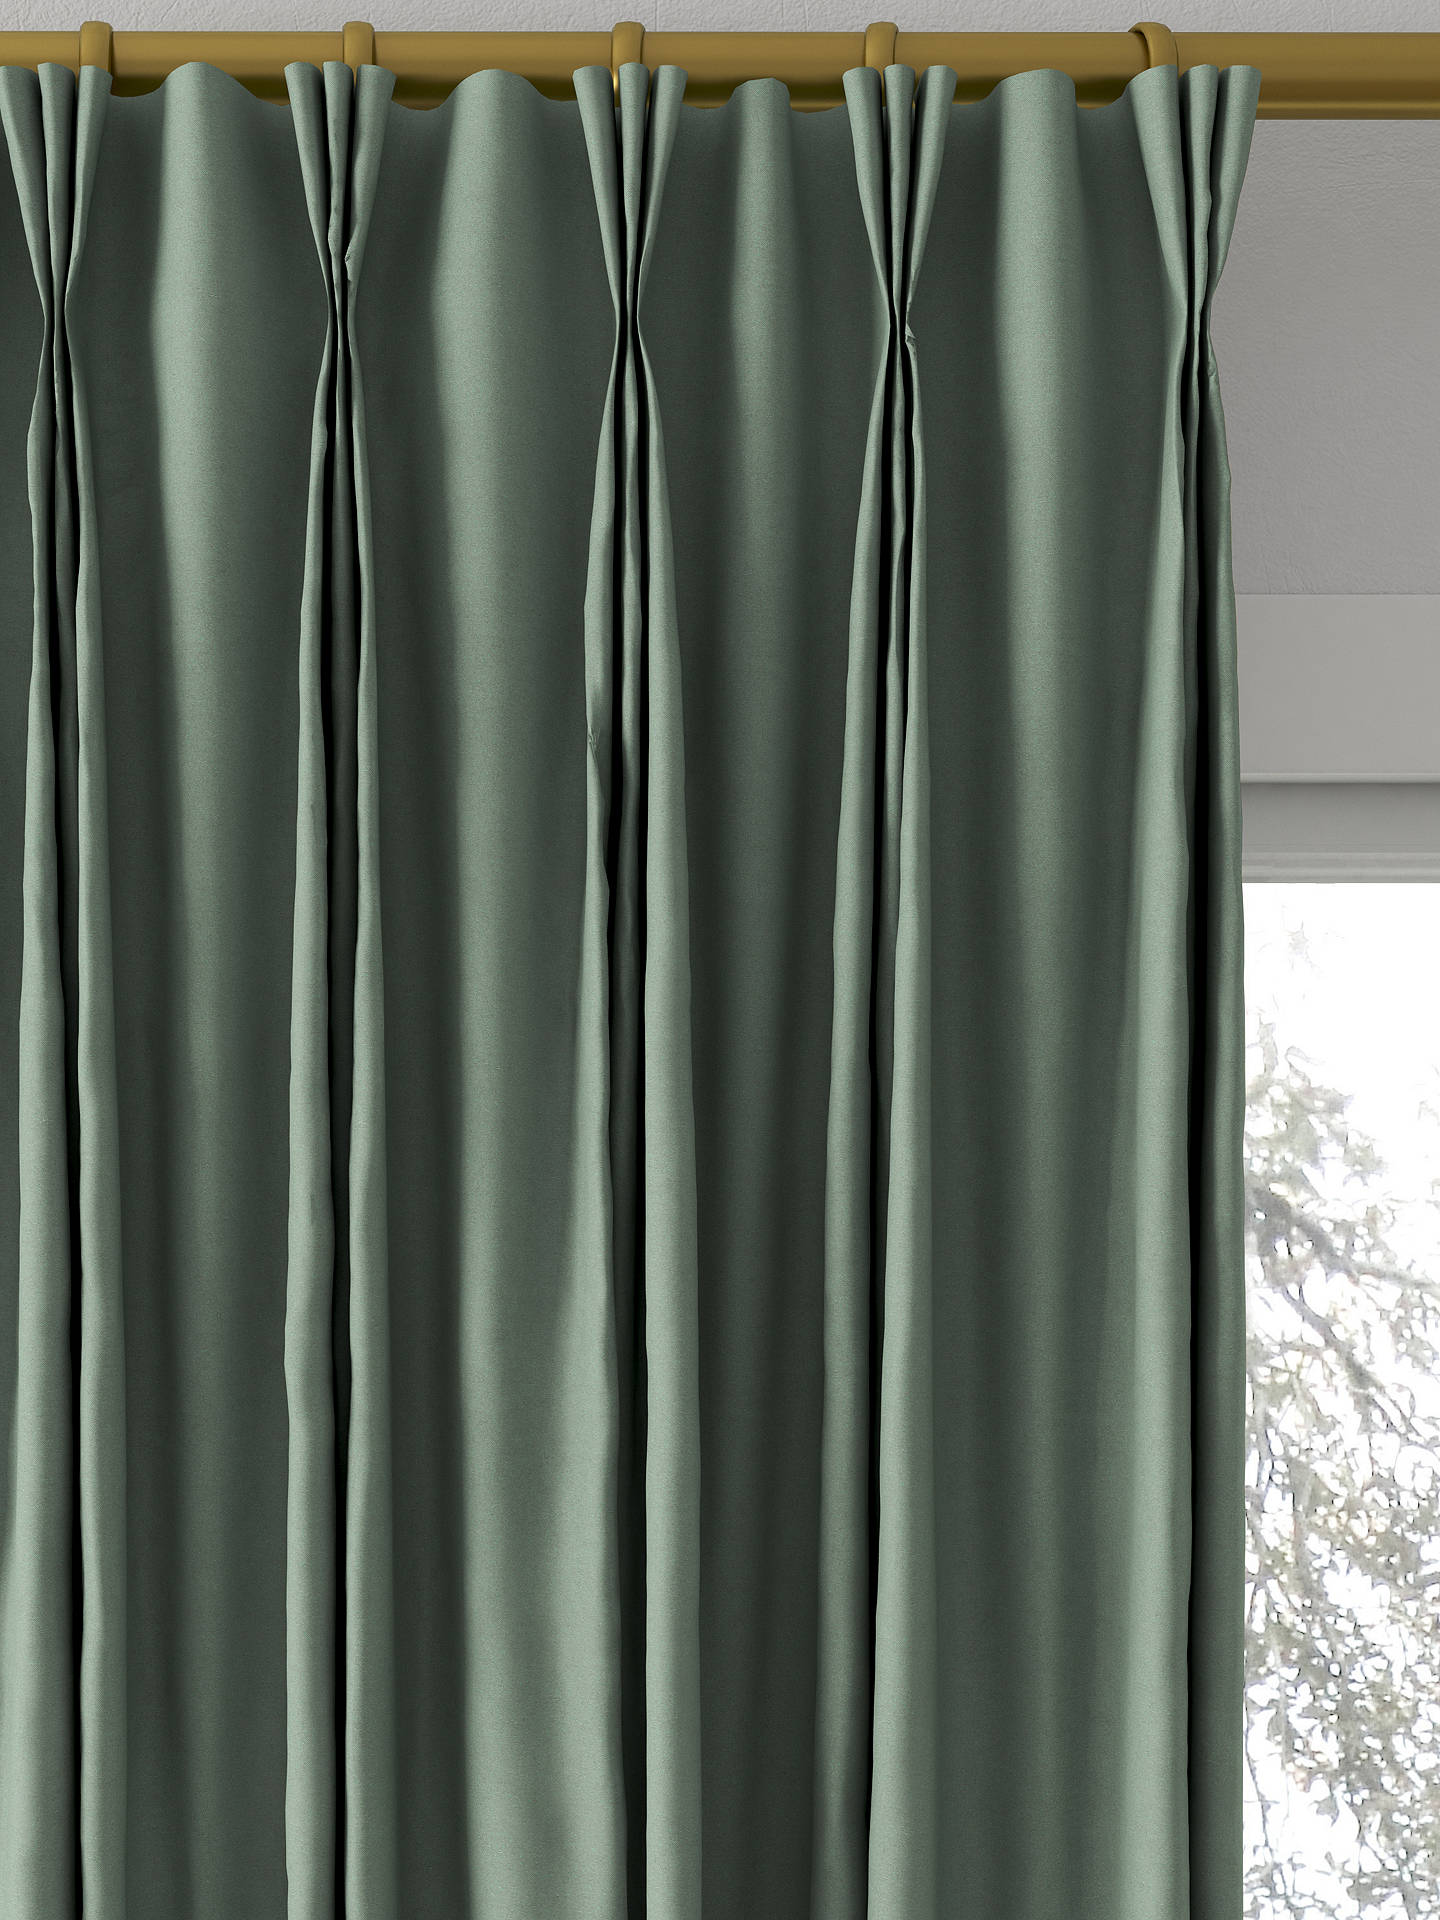 Harlequin Empower Plain Made to Measure Curtains, Eucalyptus